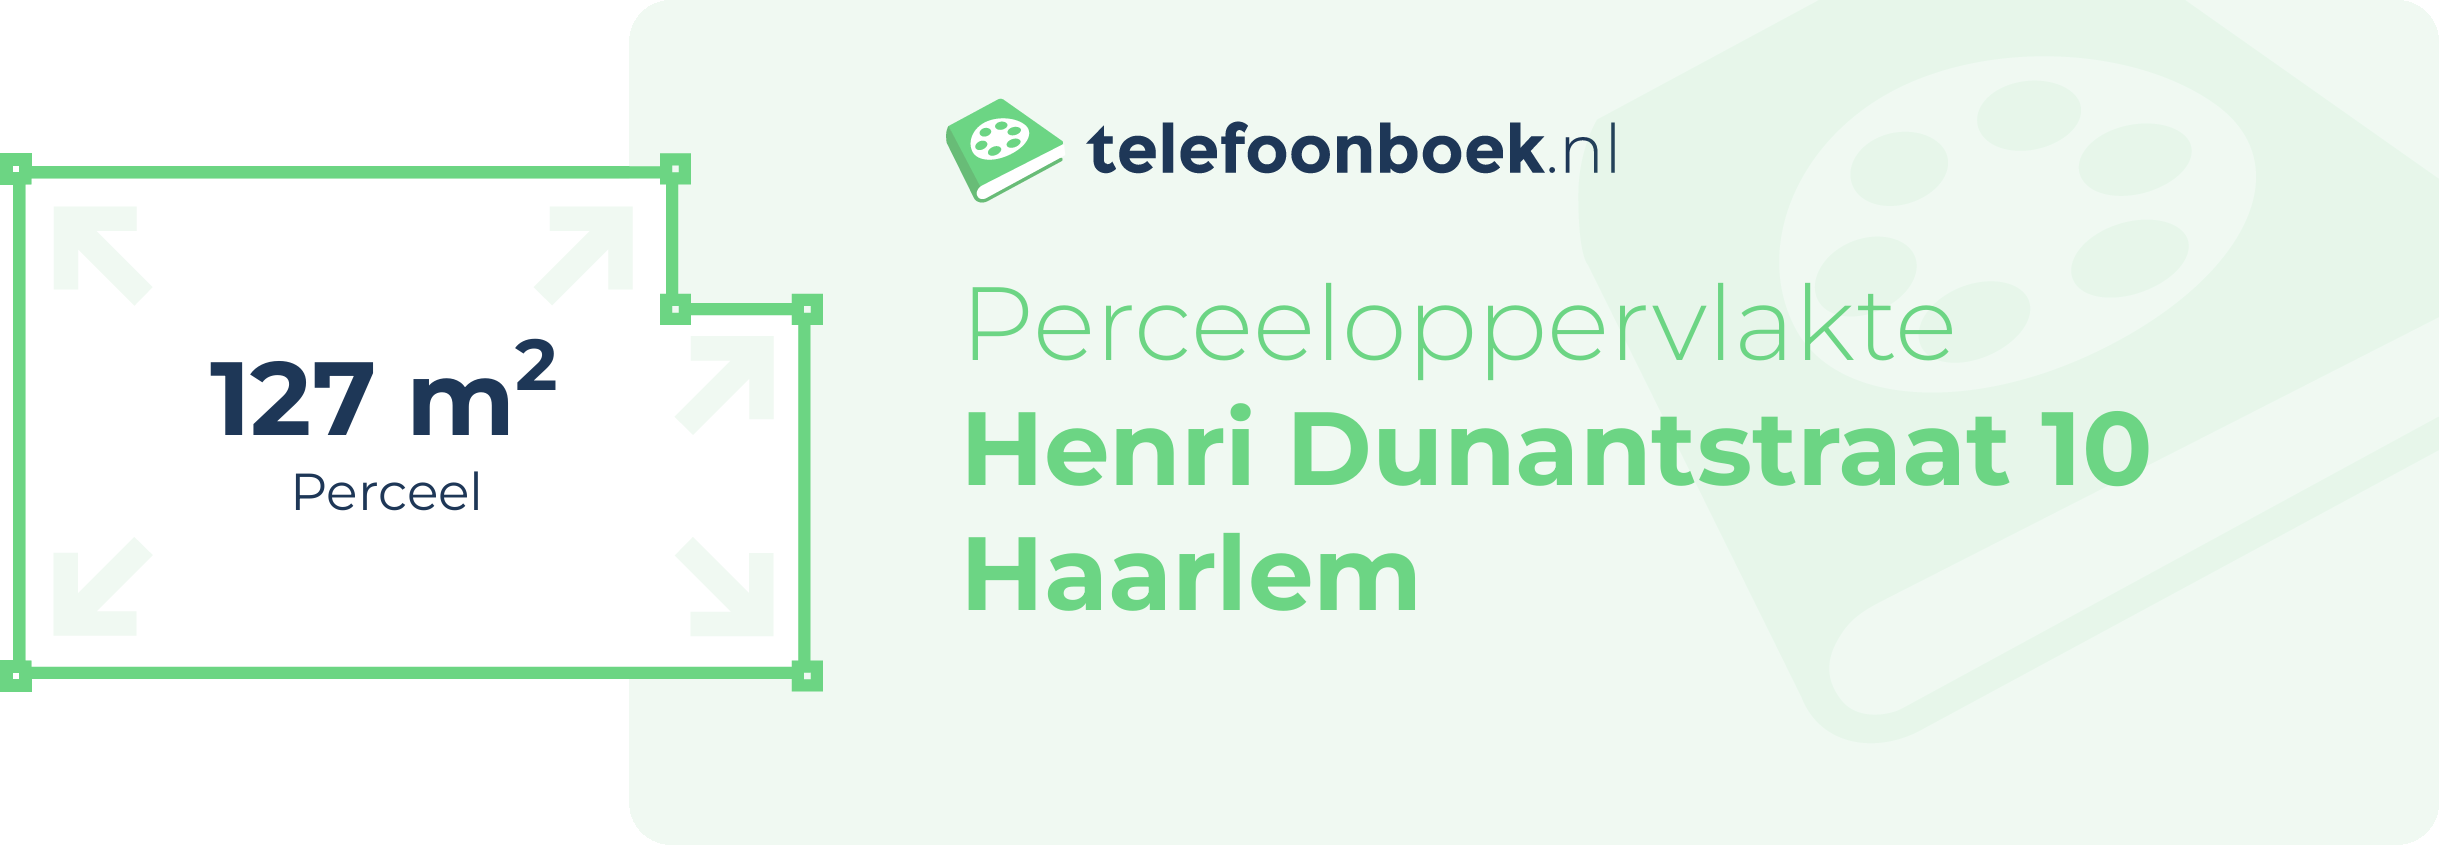 Perceeloppervlakte Henri Dunantstraat 10 Haarlem